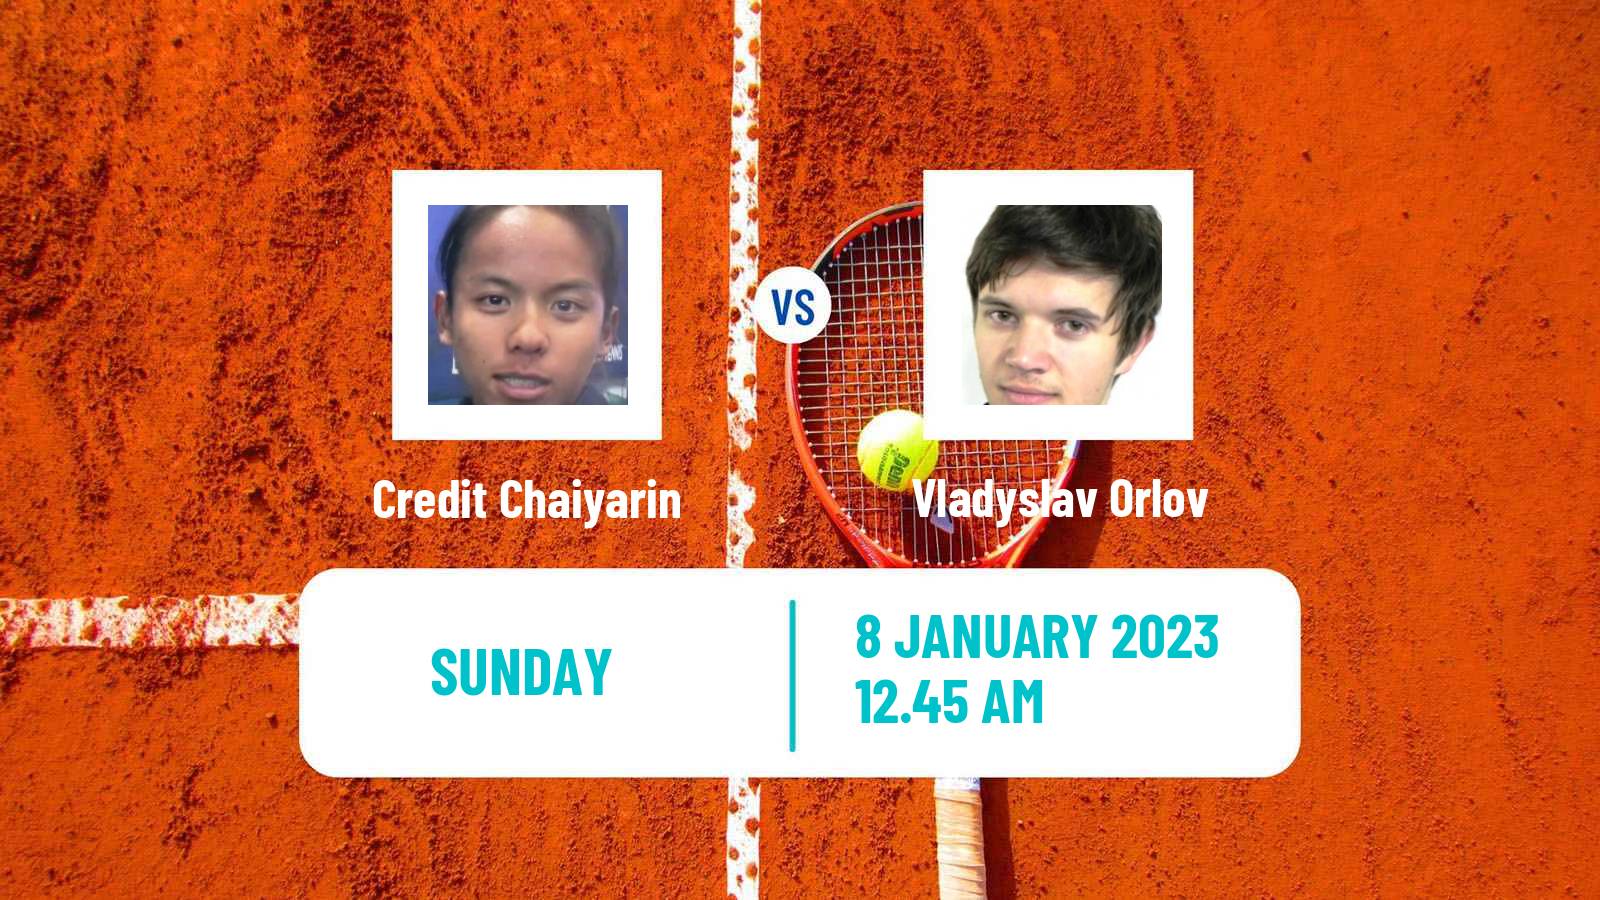 Tennis ATP Challenger Credit Chaiyarin - Vladyslav Orlov